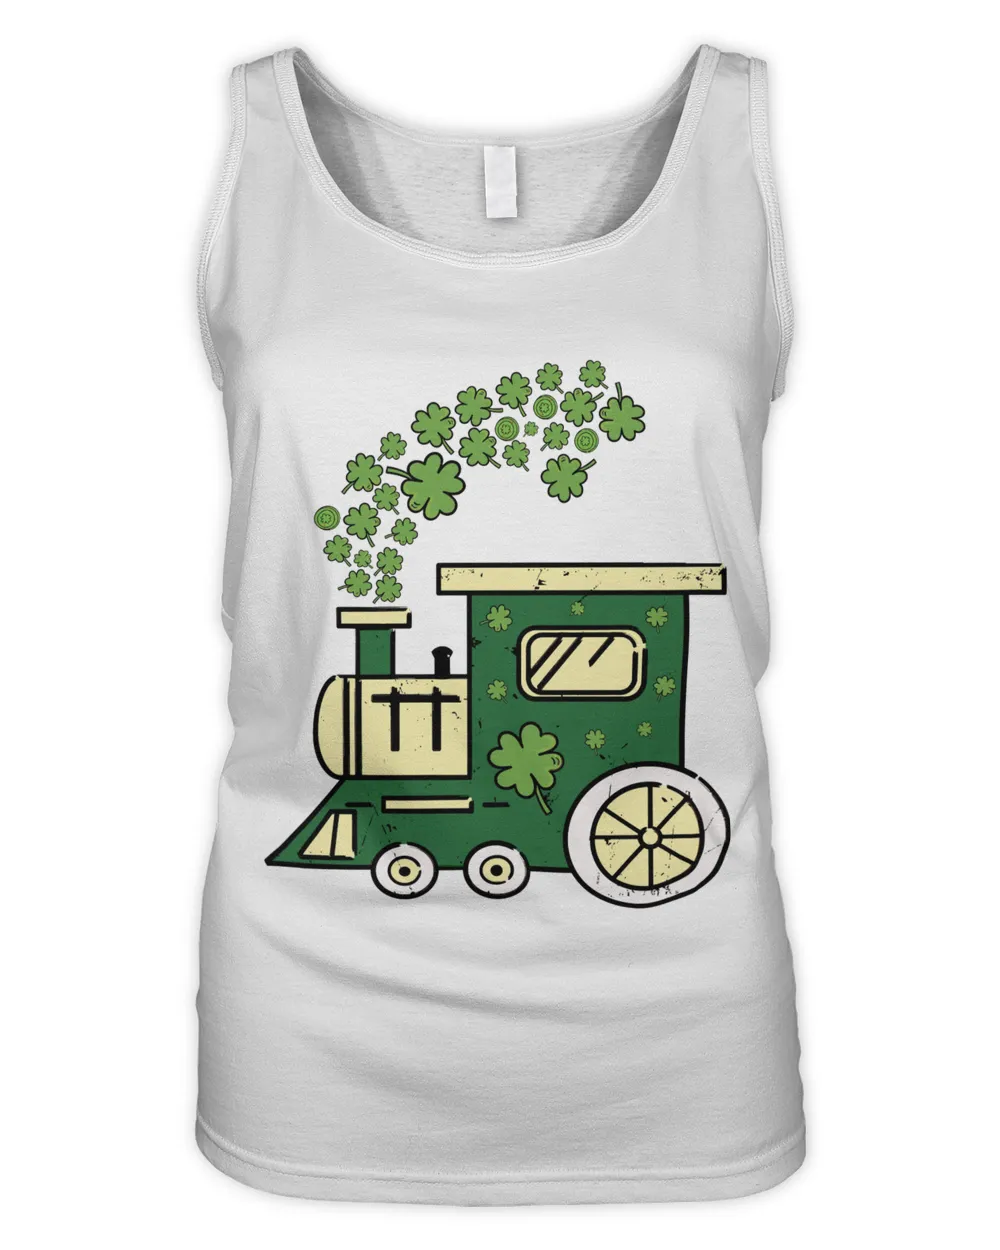 St Patrick's Day Truck Racing Car Shirt